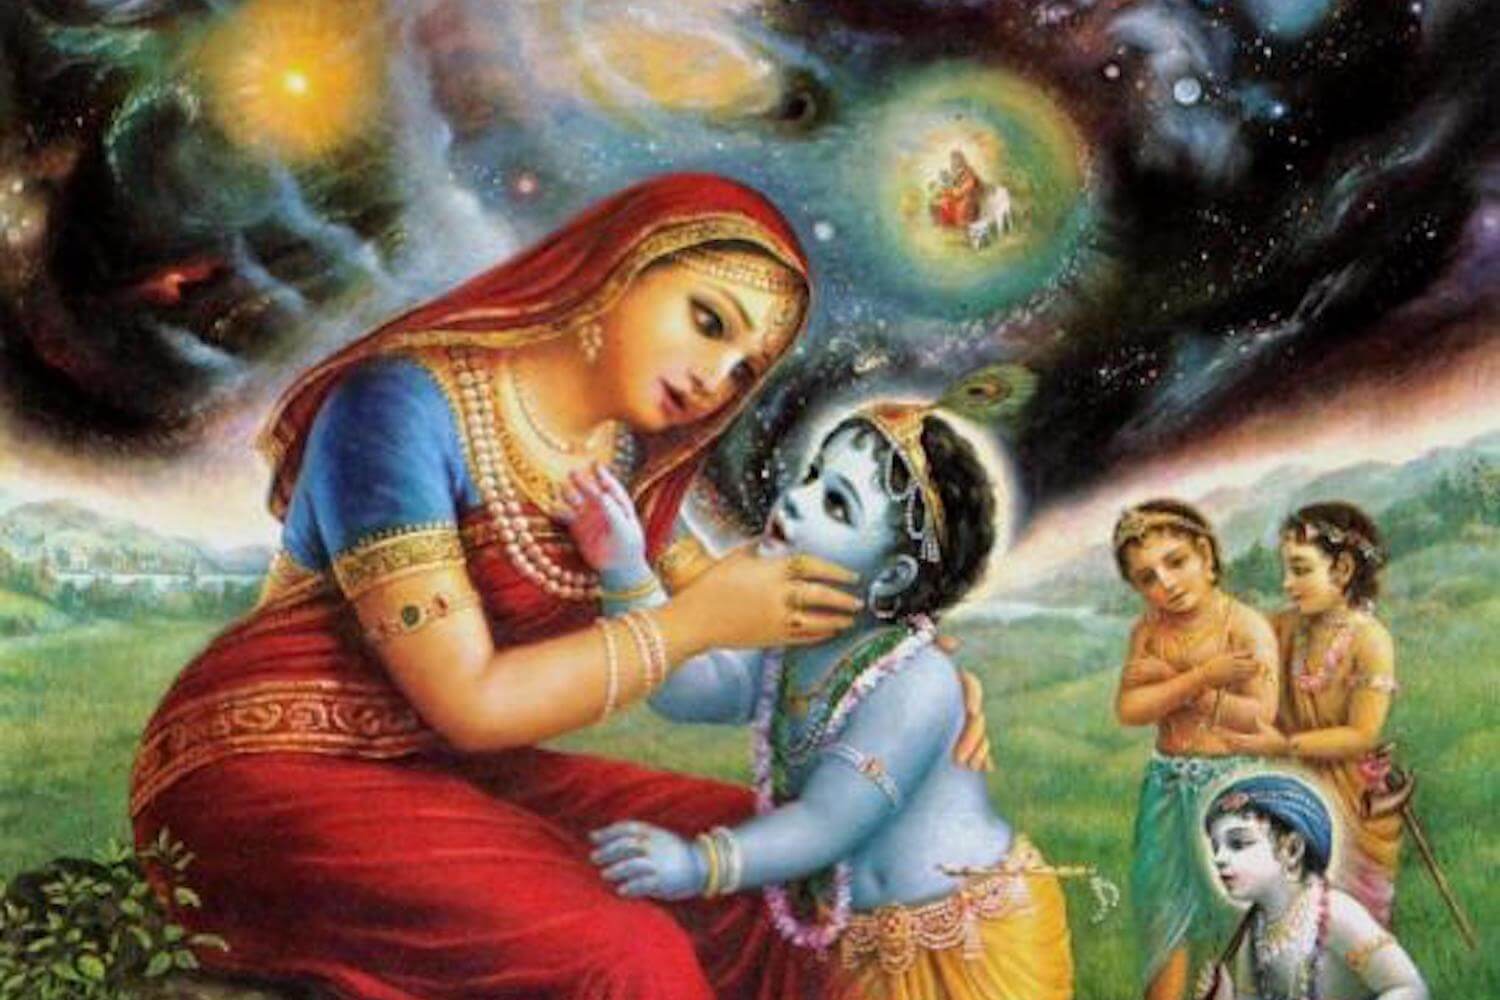 Universe seen in Krishna mouth